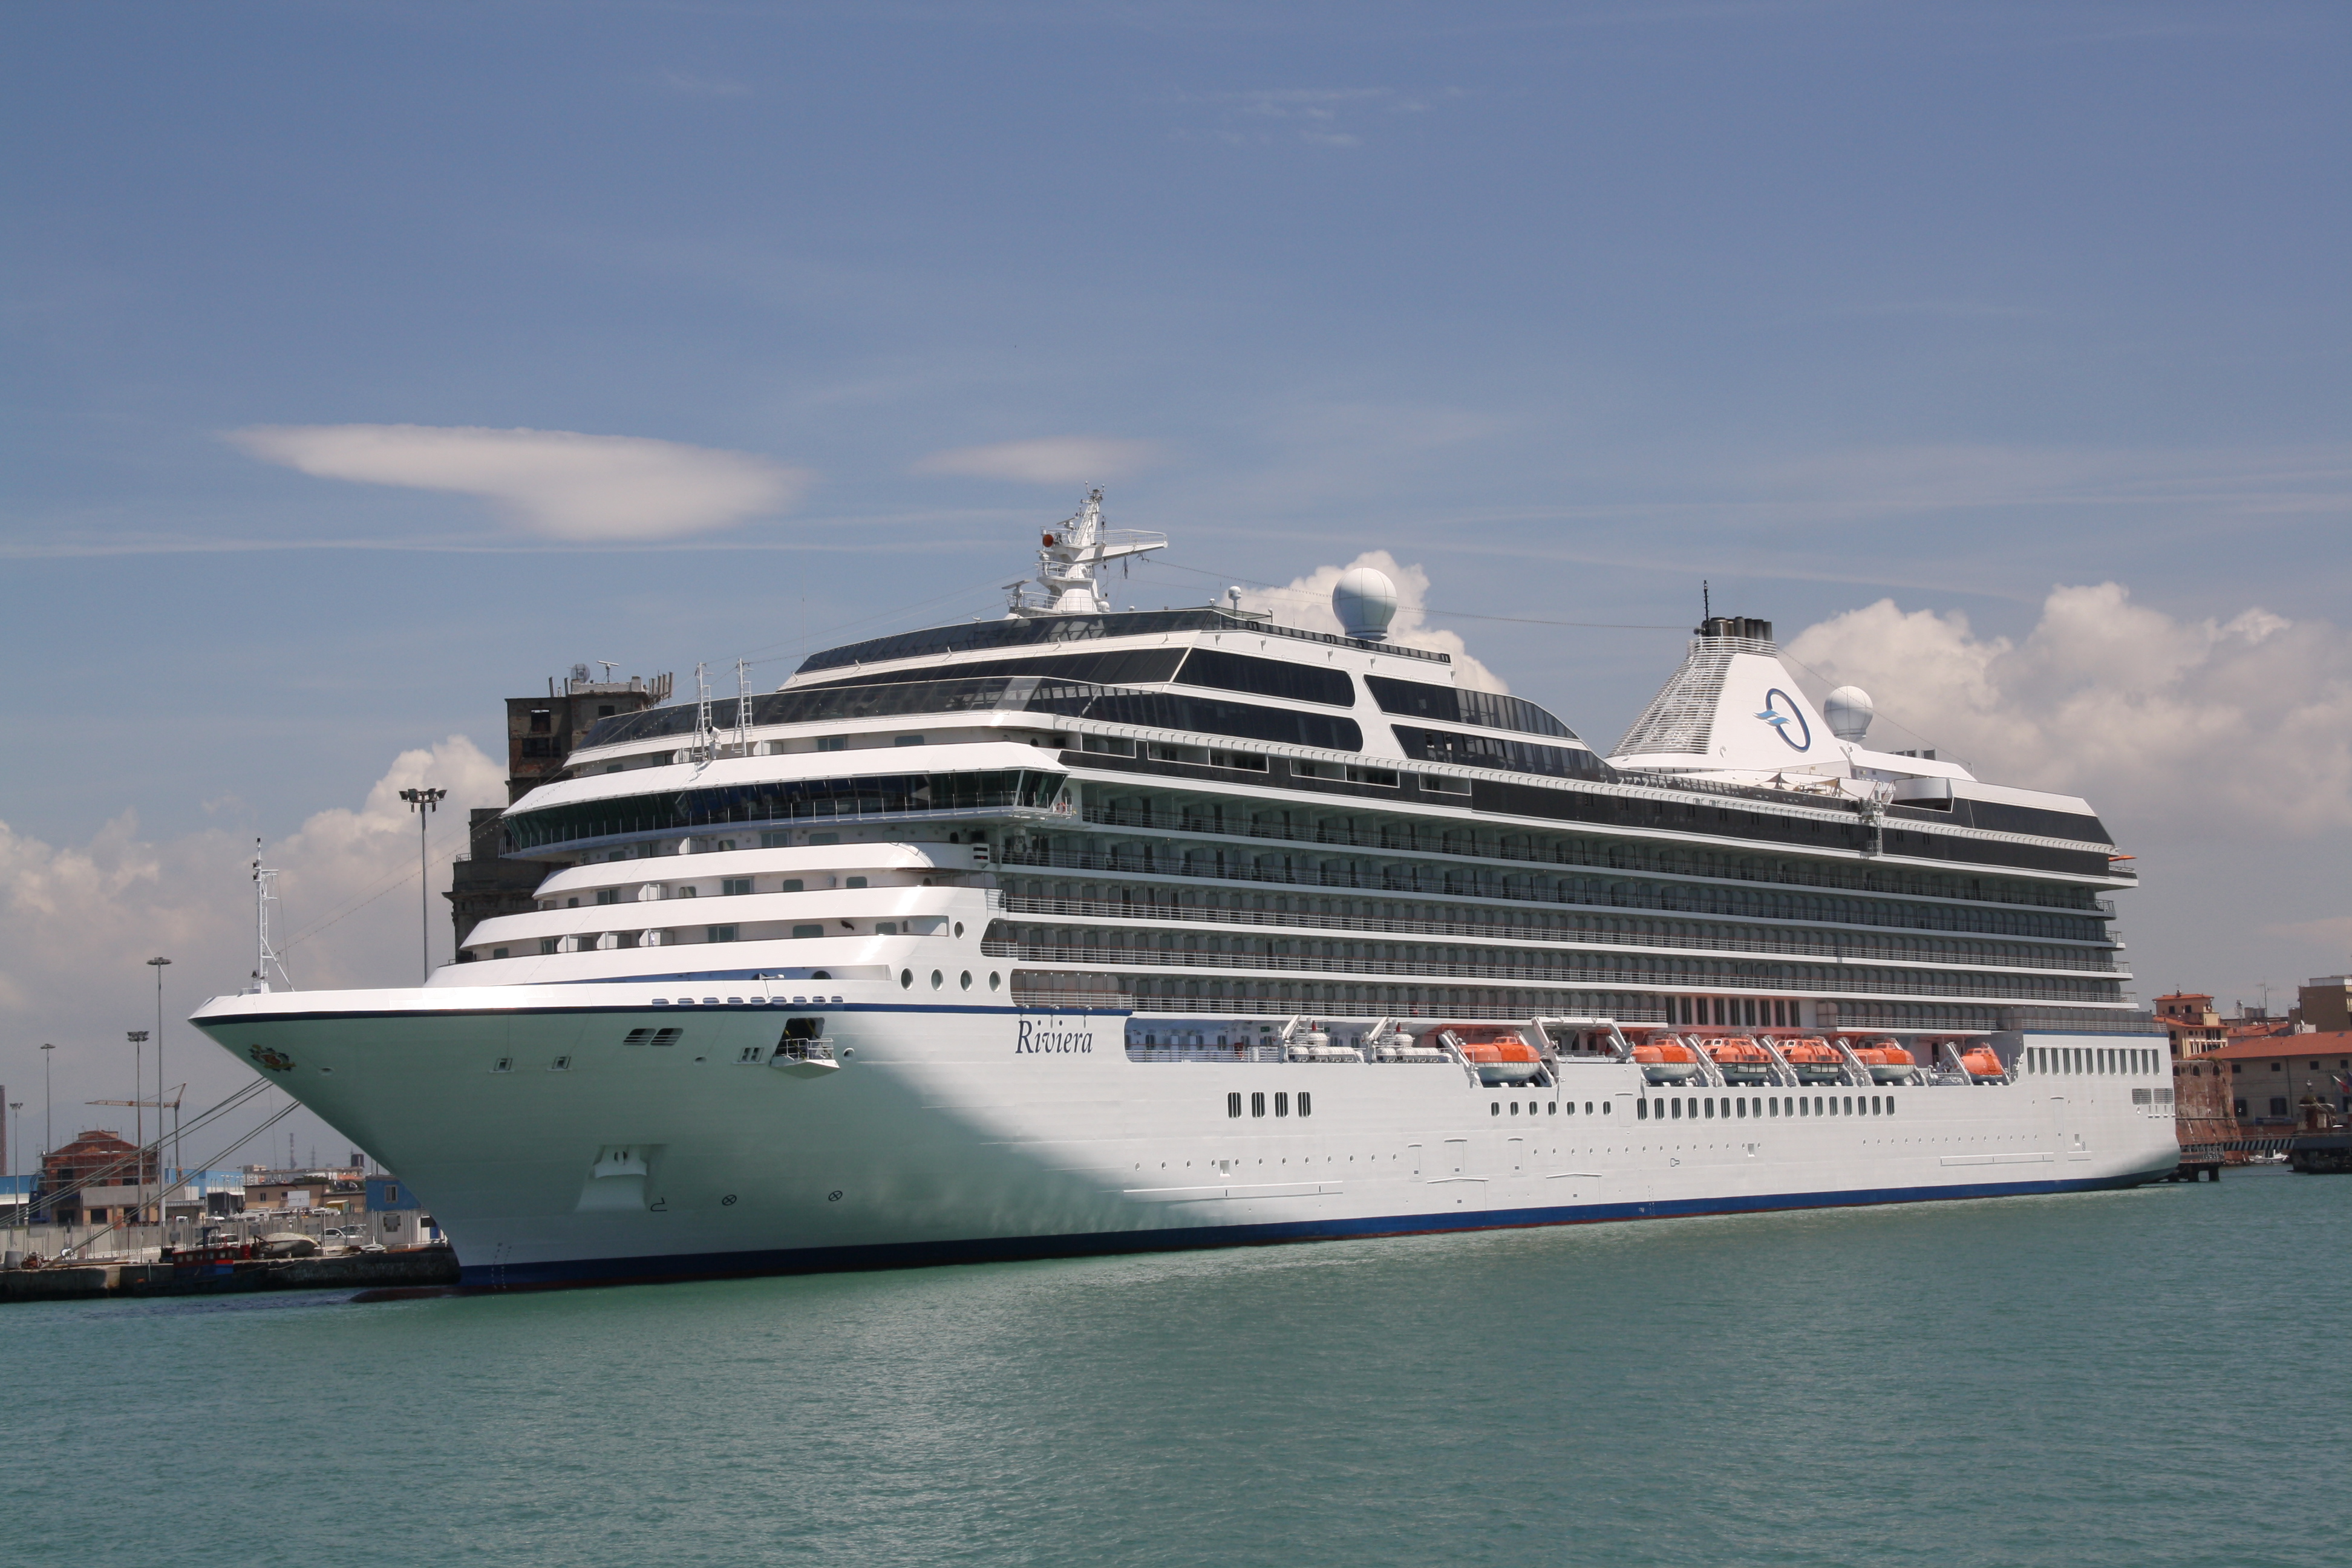 ms marina cruise ship image courtesy of Oceania